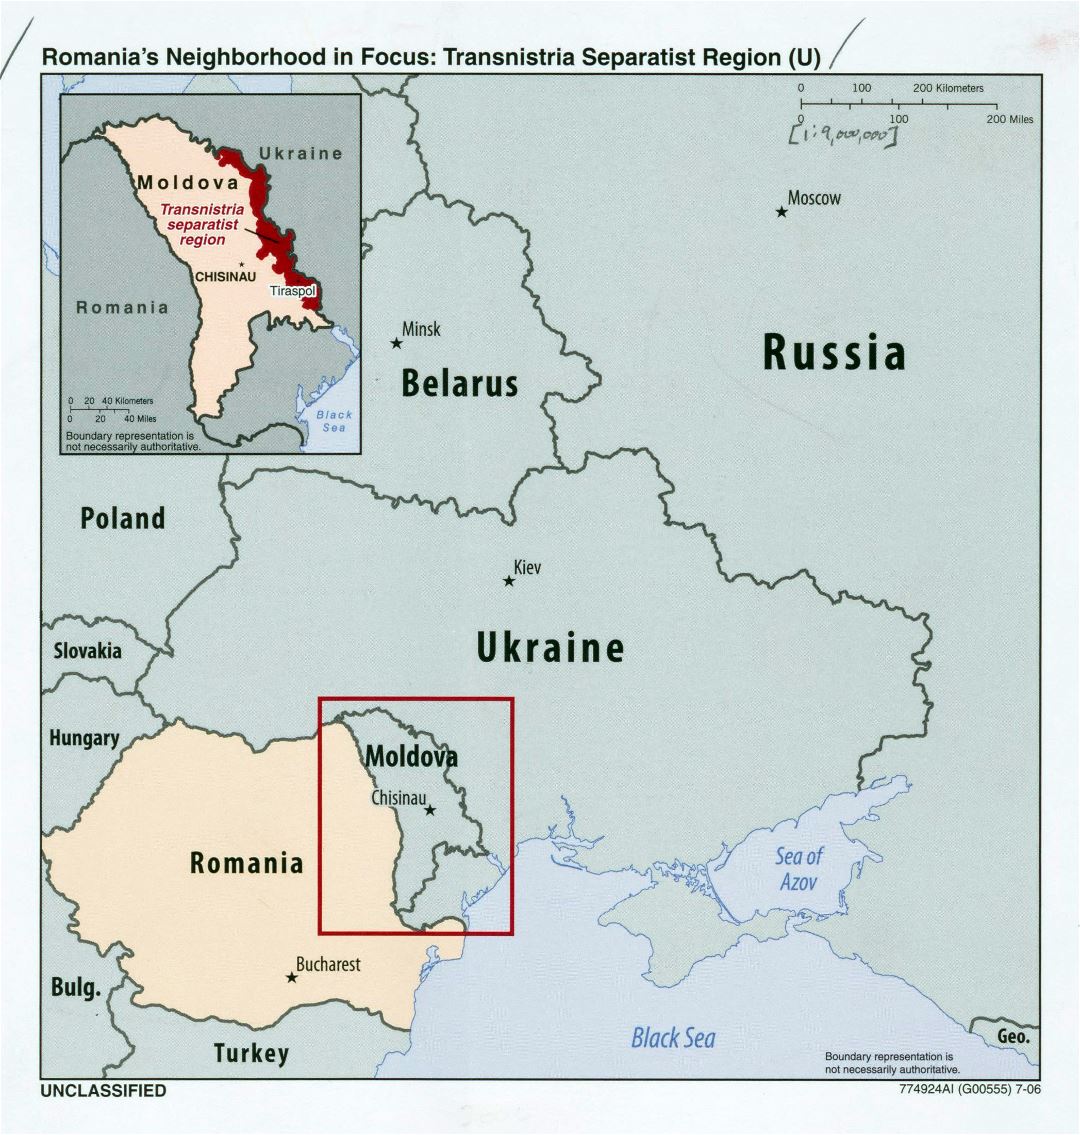 Large detail map of Romania's neighborhood in focus - Transnistria separatist region - 2006